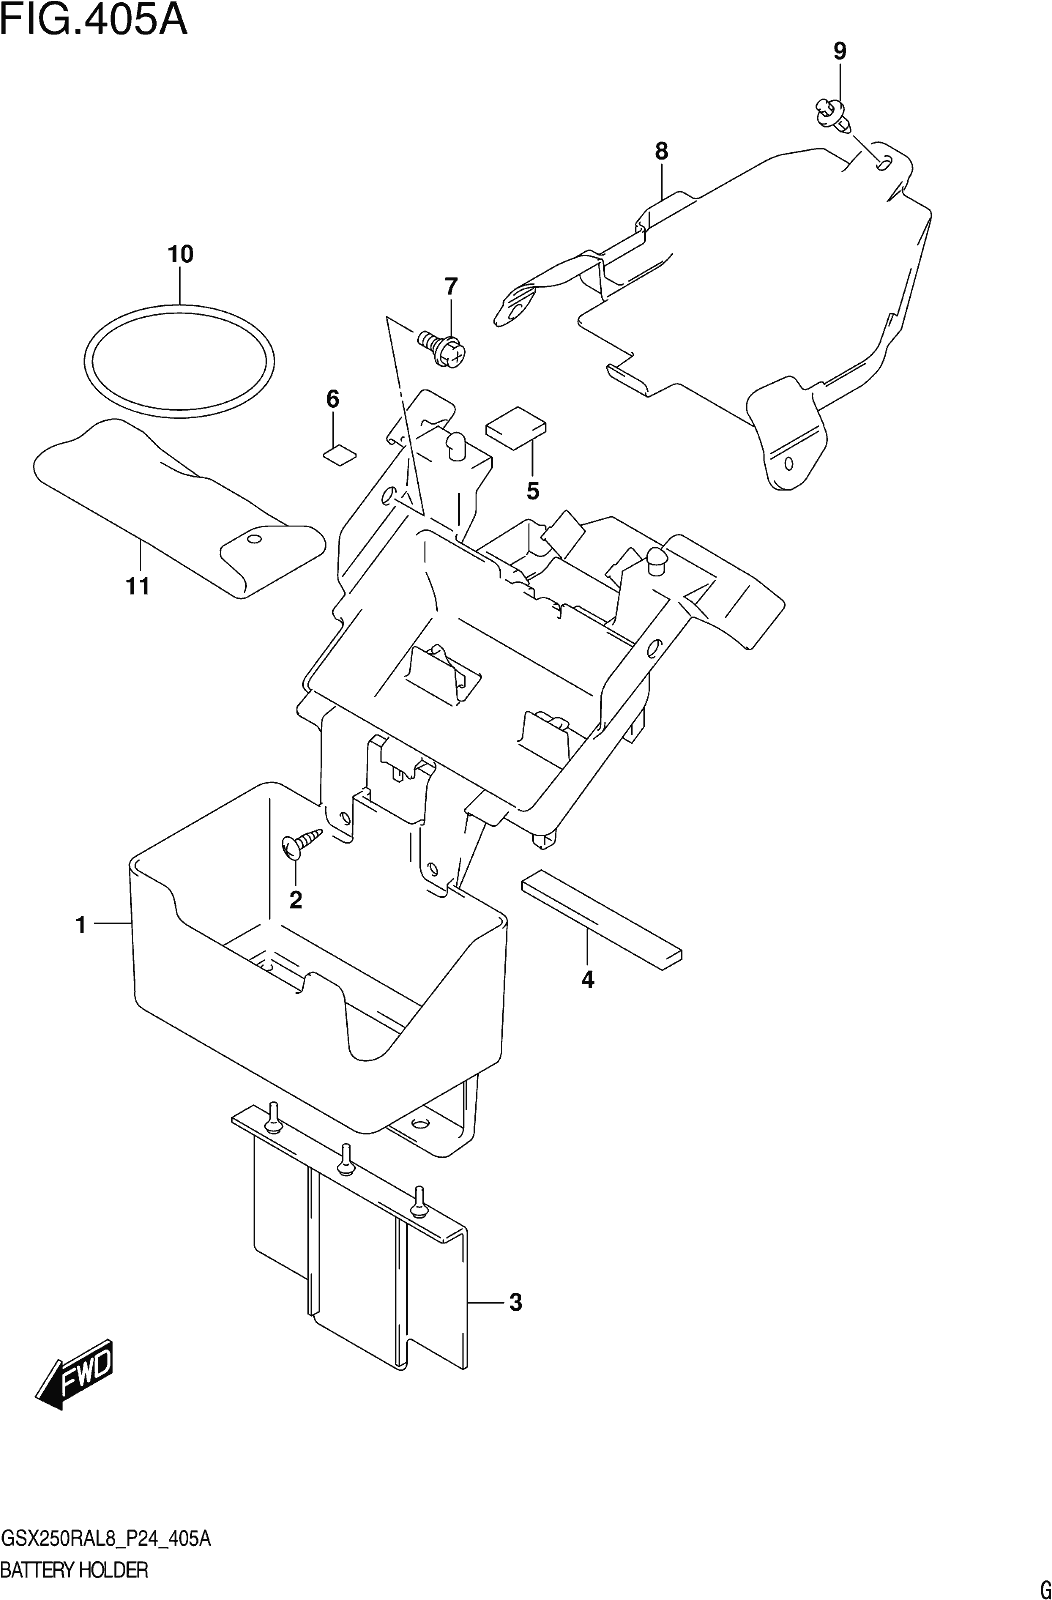 Fig.405a Battery Holder